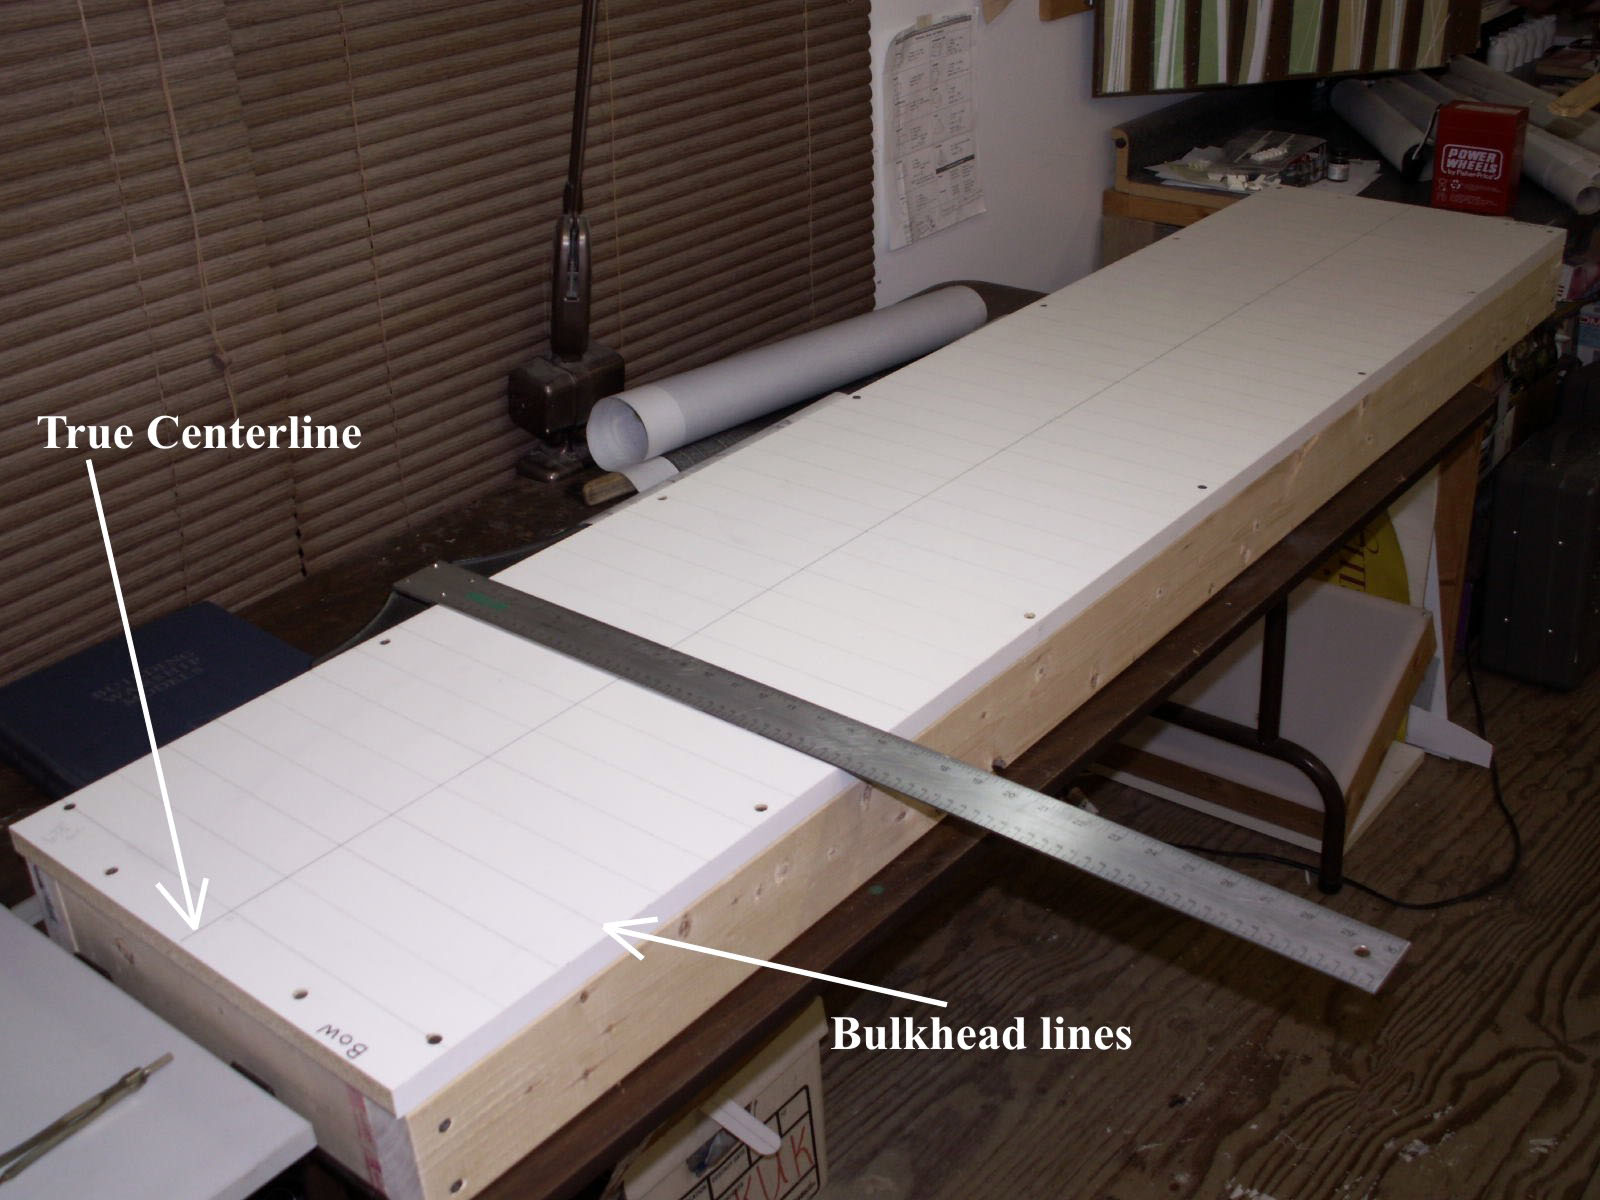 model airplane building board